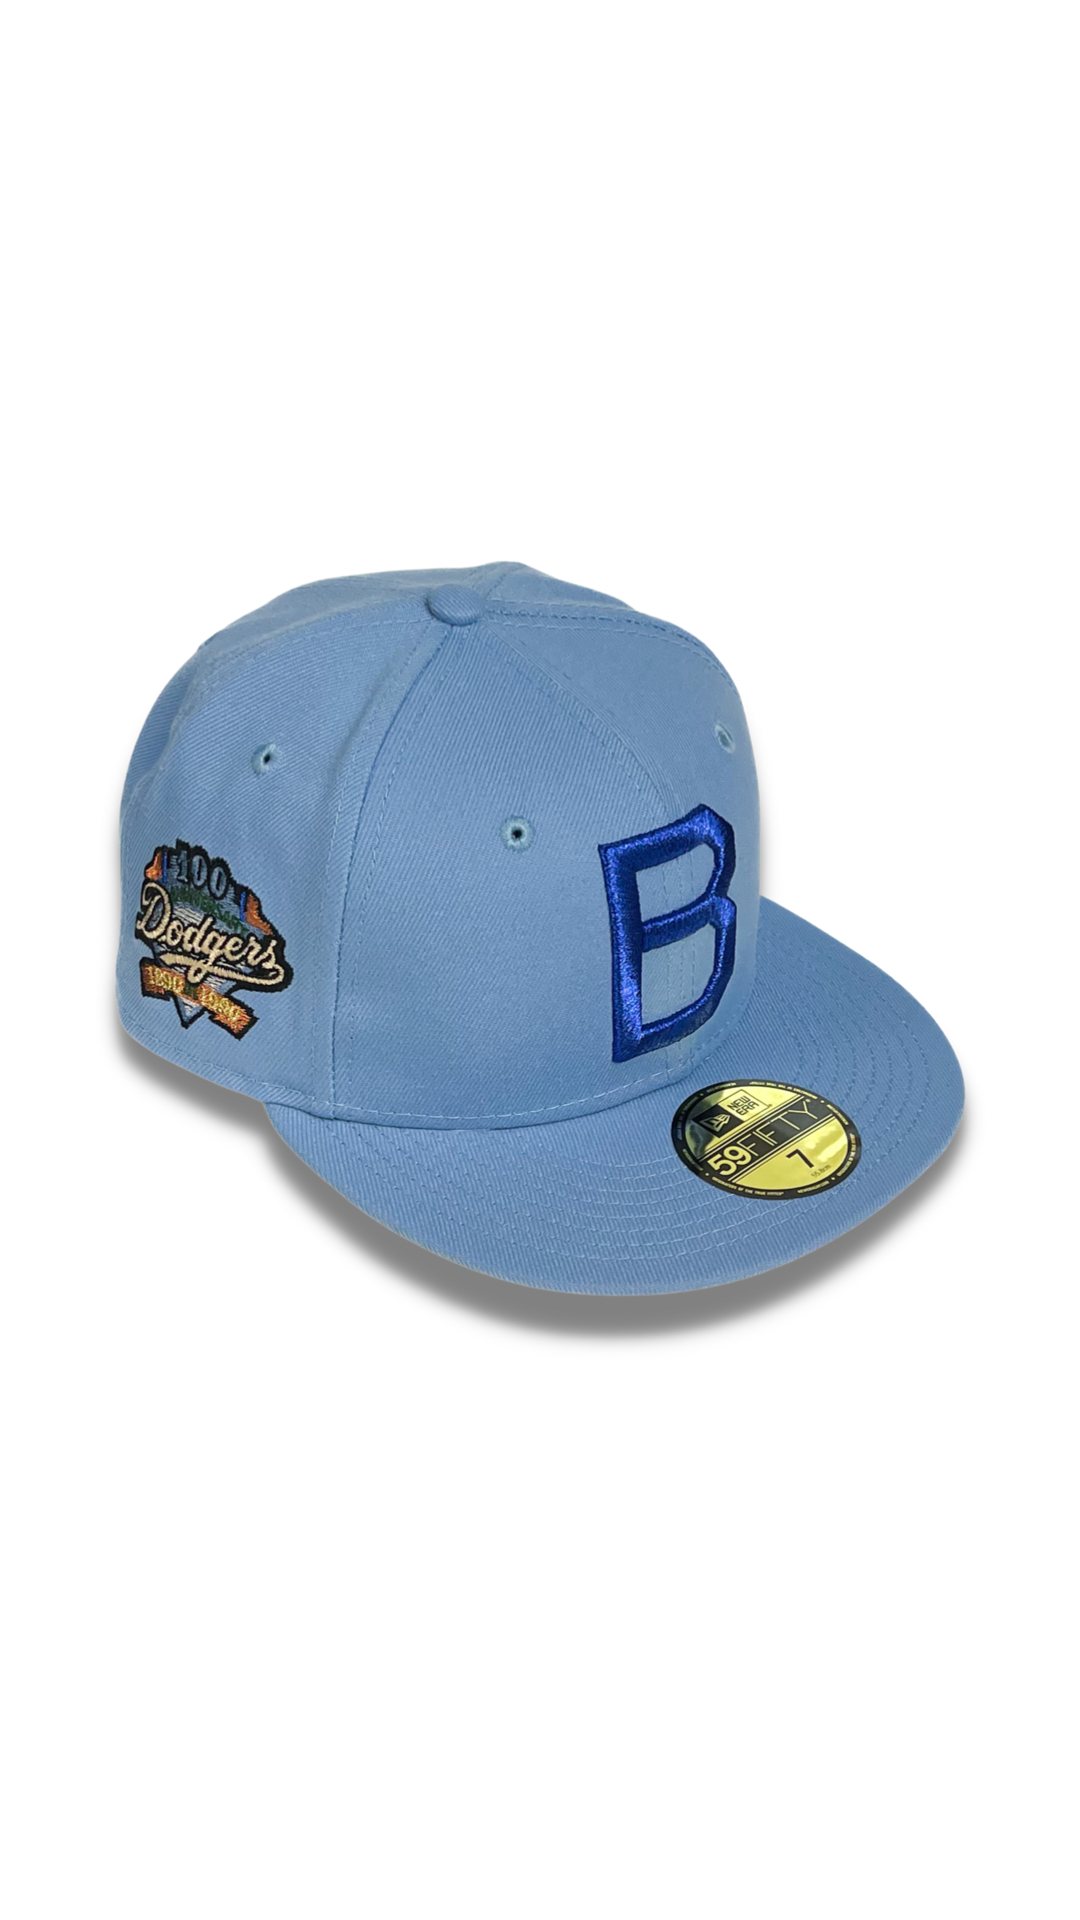 NEW ERA BENJAMIN BROOKLYN DODGERS FITTED HAT (SONGBIRD BLUE